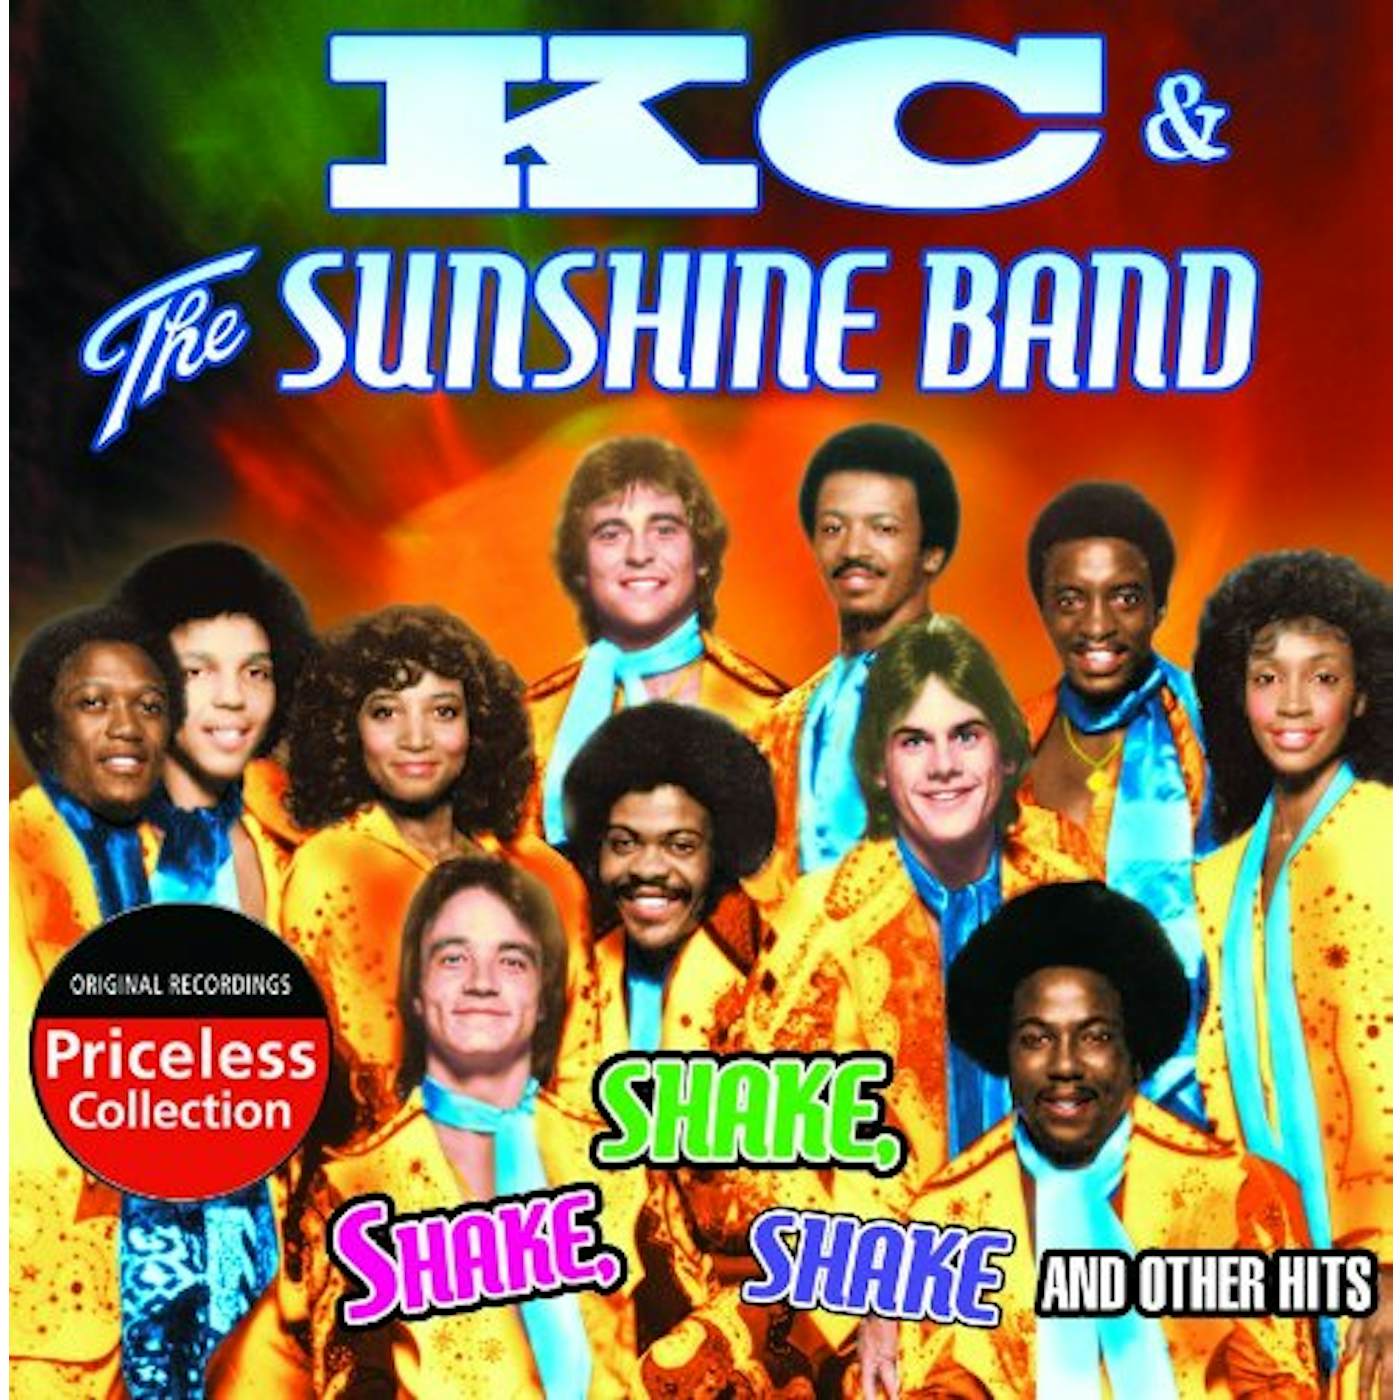 K.C. & SUNSHINE BAND SHAKE SHAKE SHAKE & OTHER HITS CD